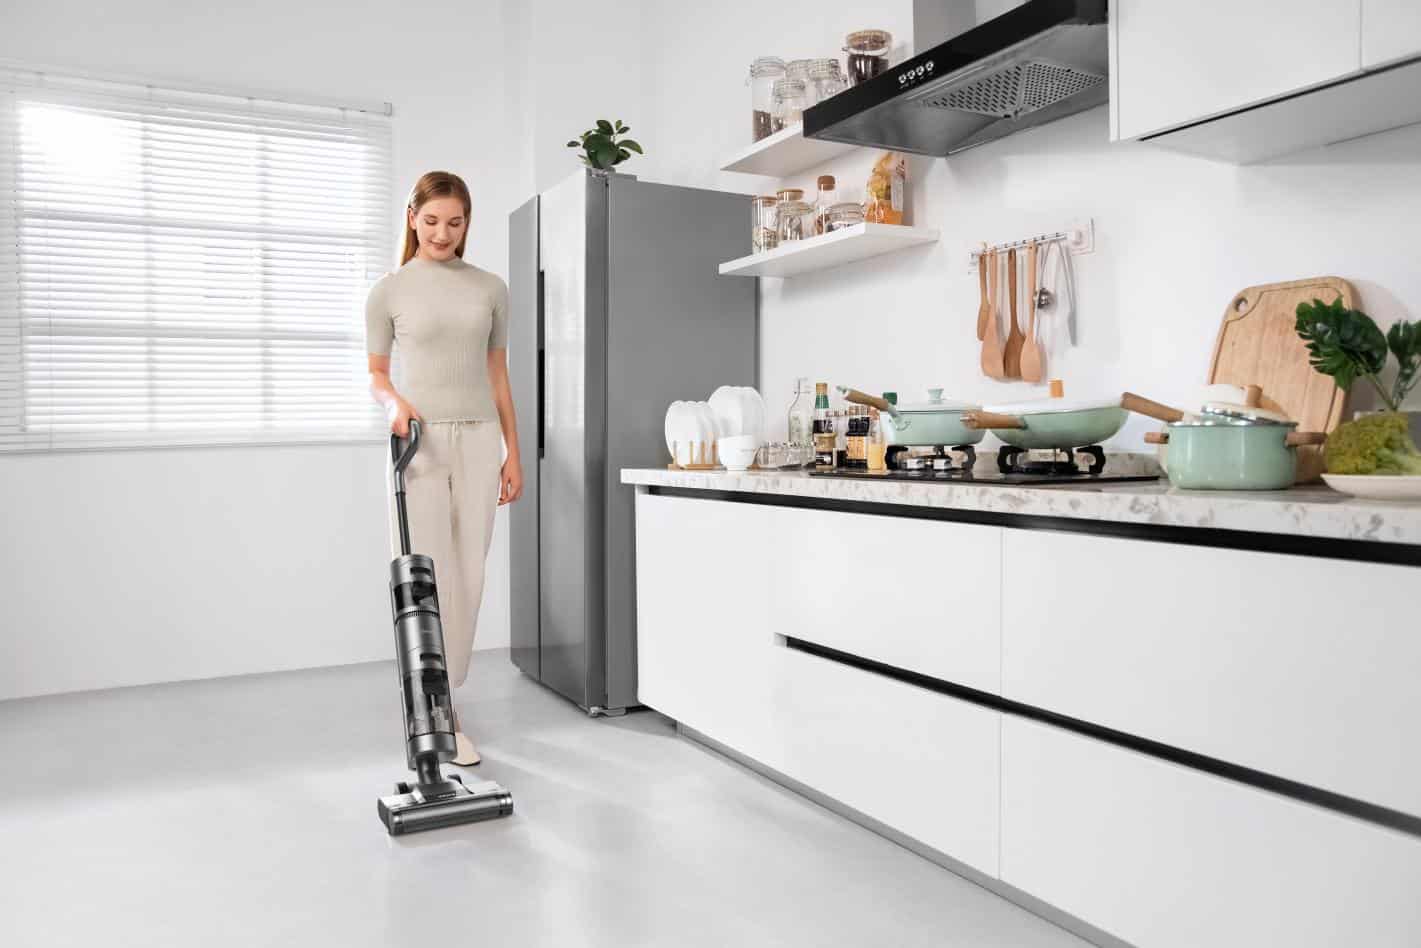 dreametech woman vacuuming